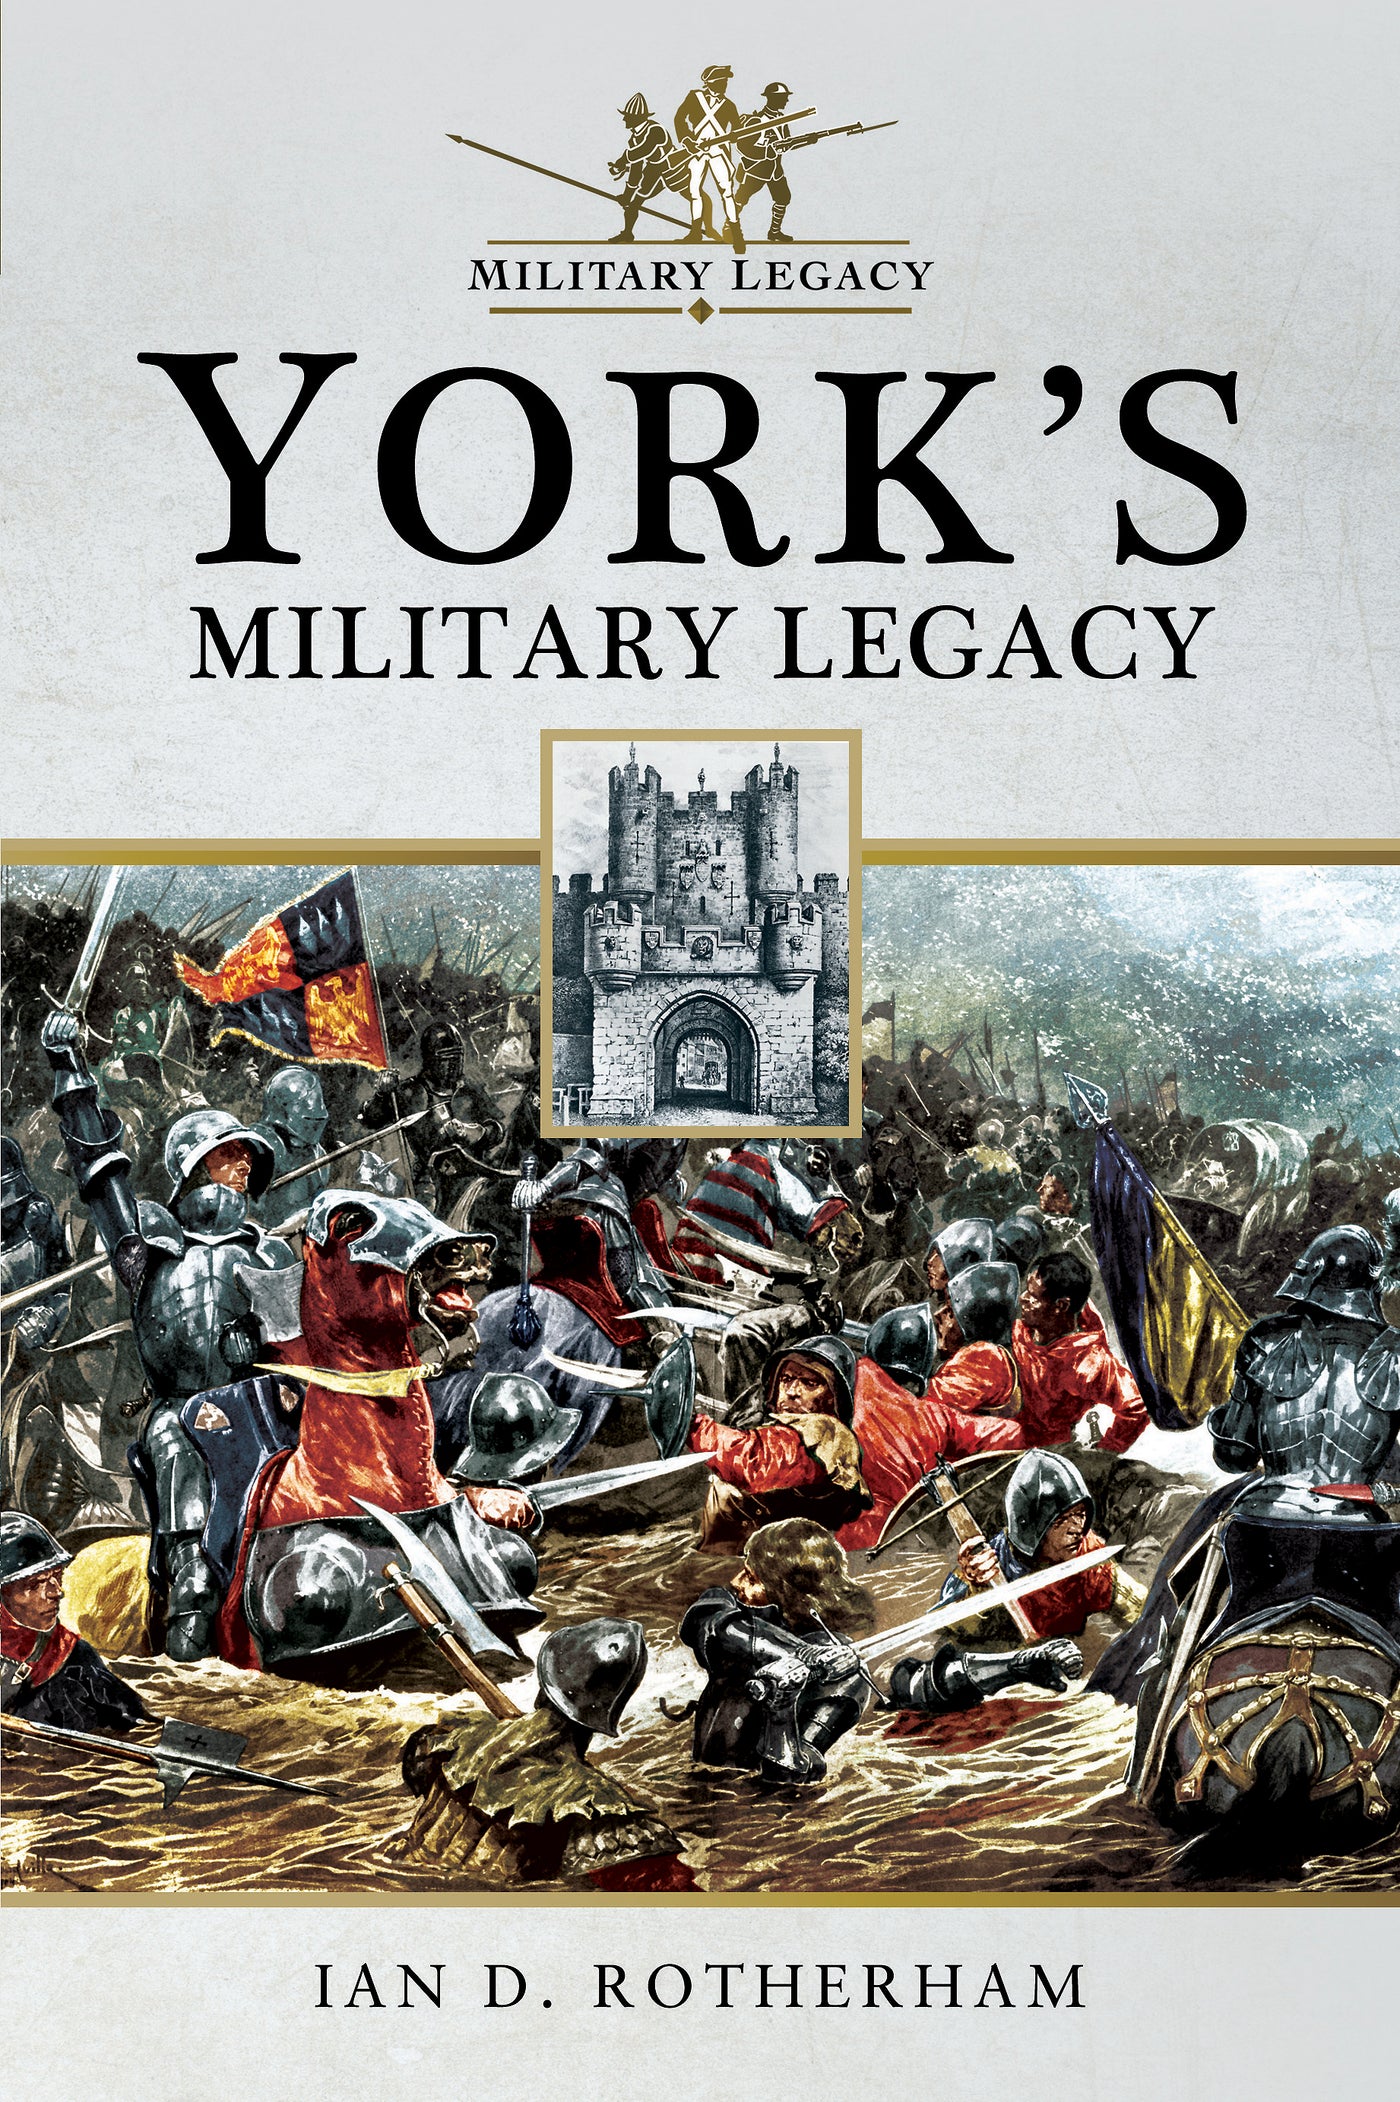 York's Military Legacy